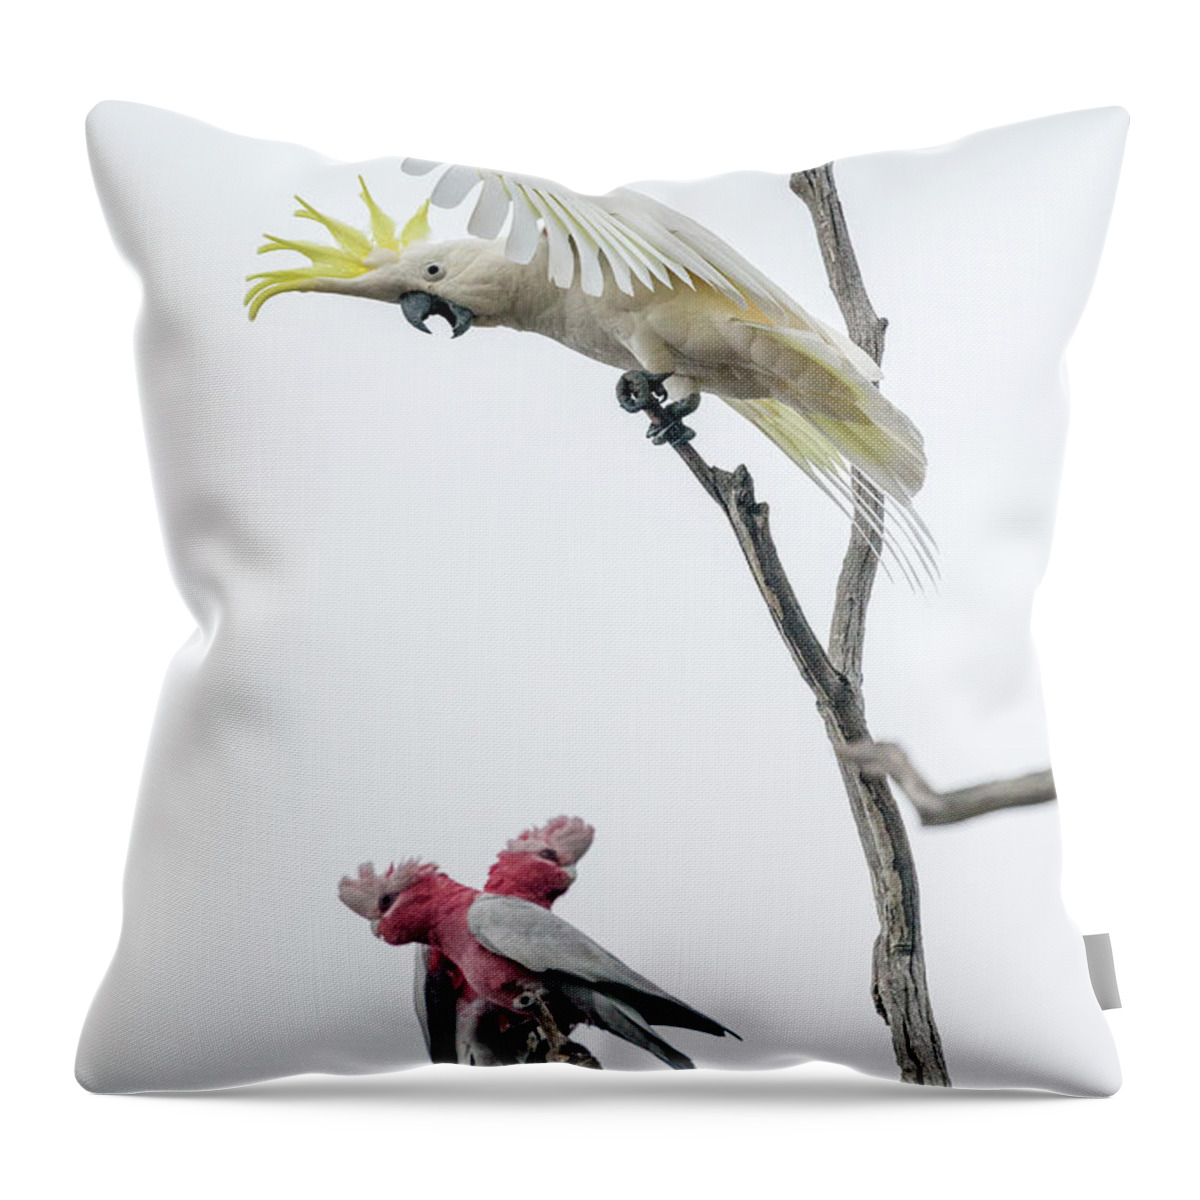 Bird Throw Pillow featuring the photograph Get Off My Perch by Werner Padarin